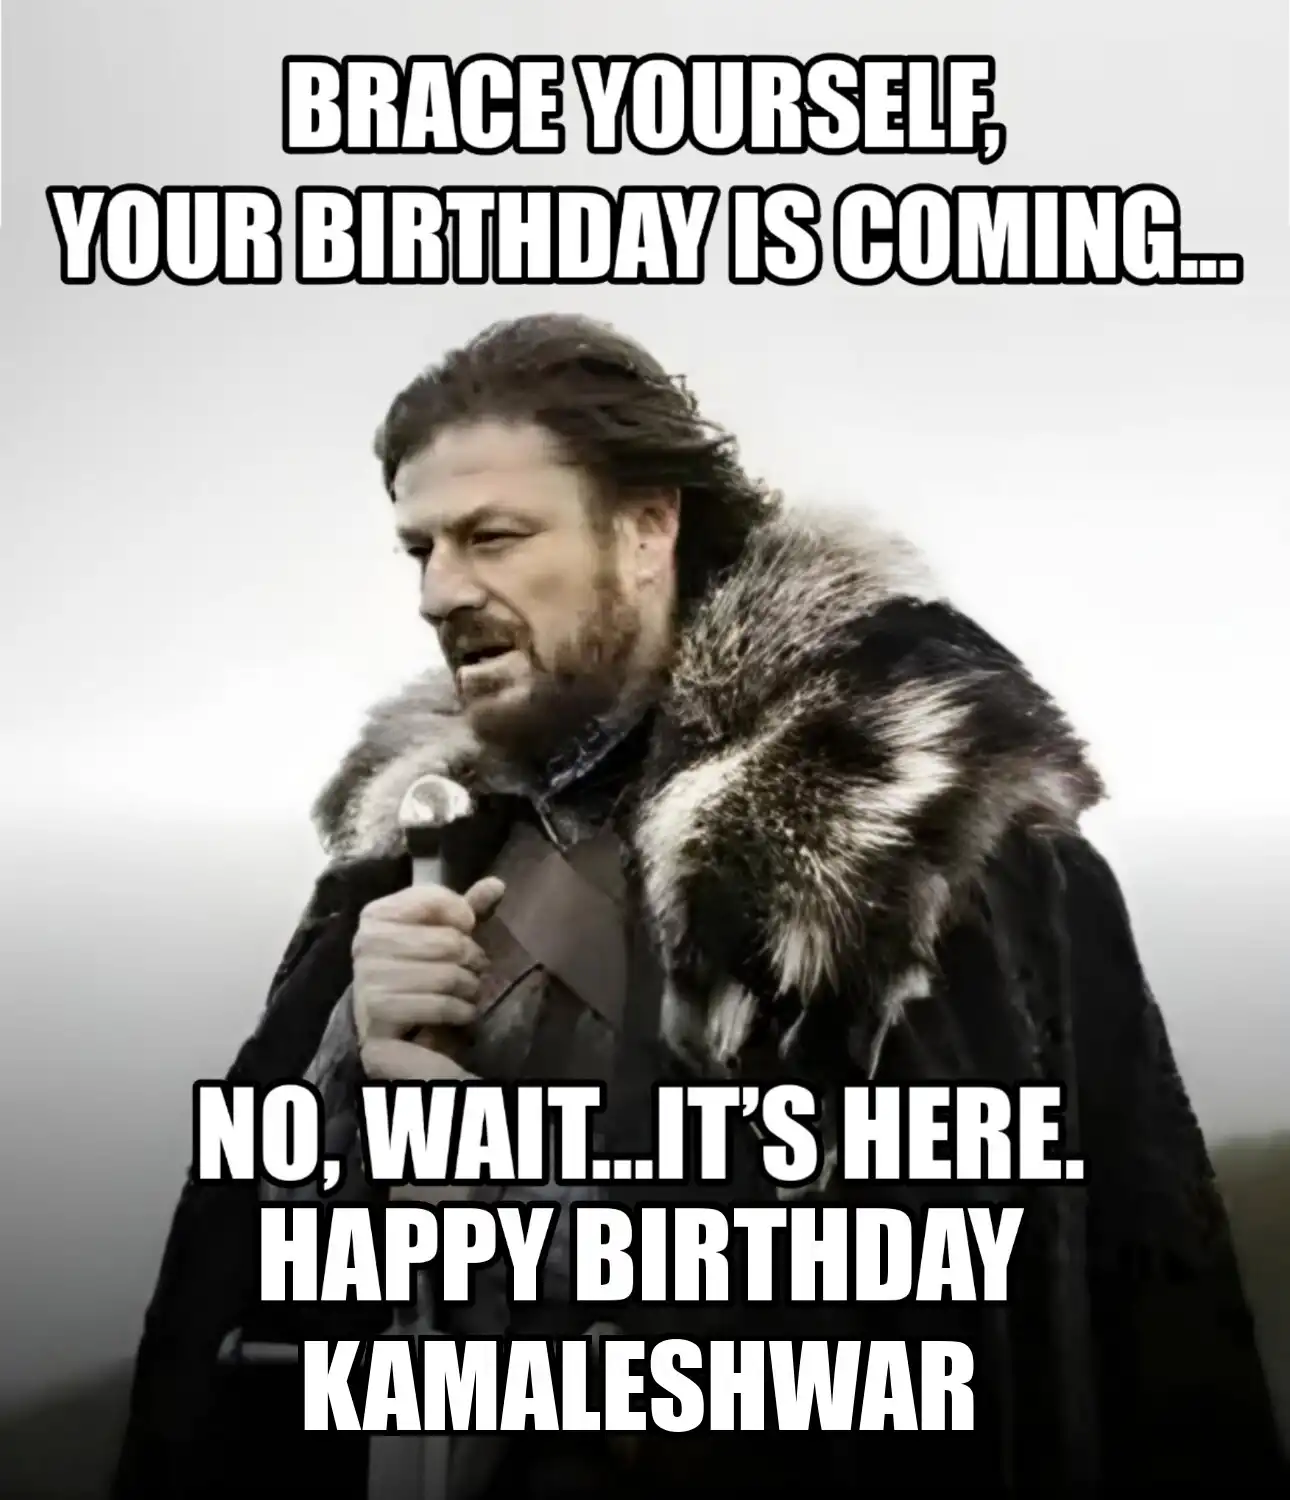 Happy Birthday Kamaleshwar Brace Yourself Your Birthday Is Coming Meme